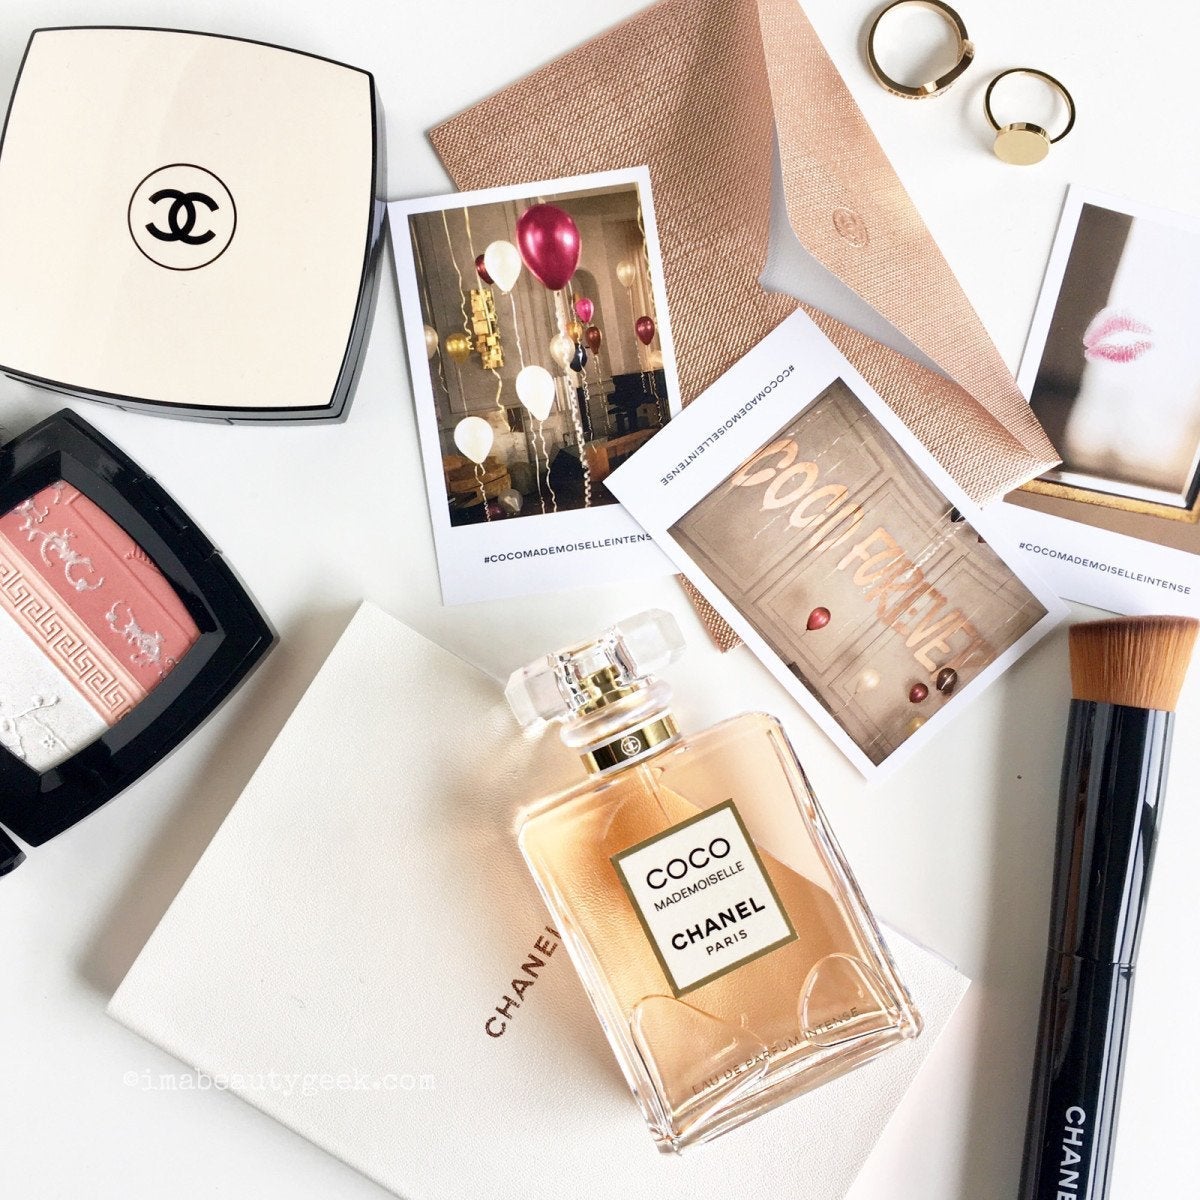 Chanel Coco Mademoiselle Body Cream - My Perfume Shop Australia